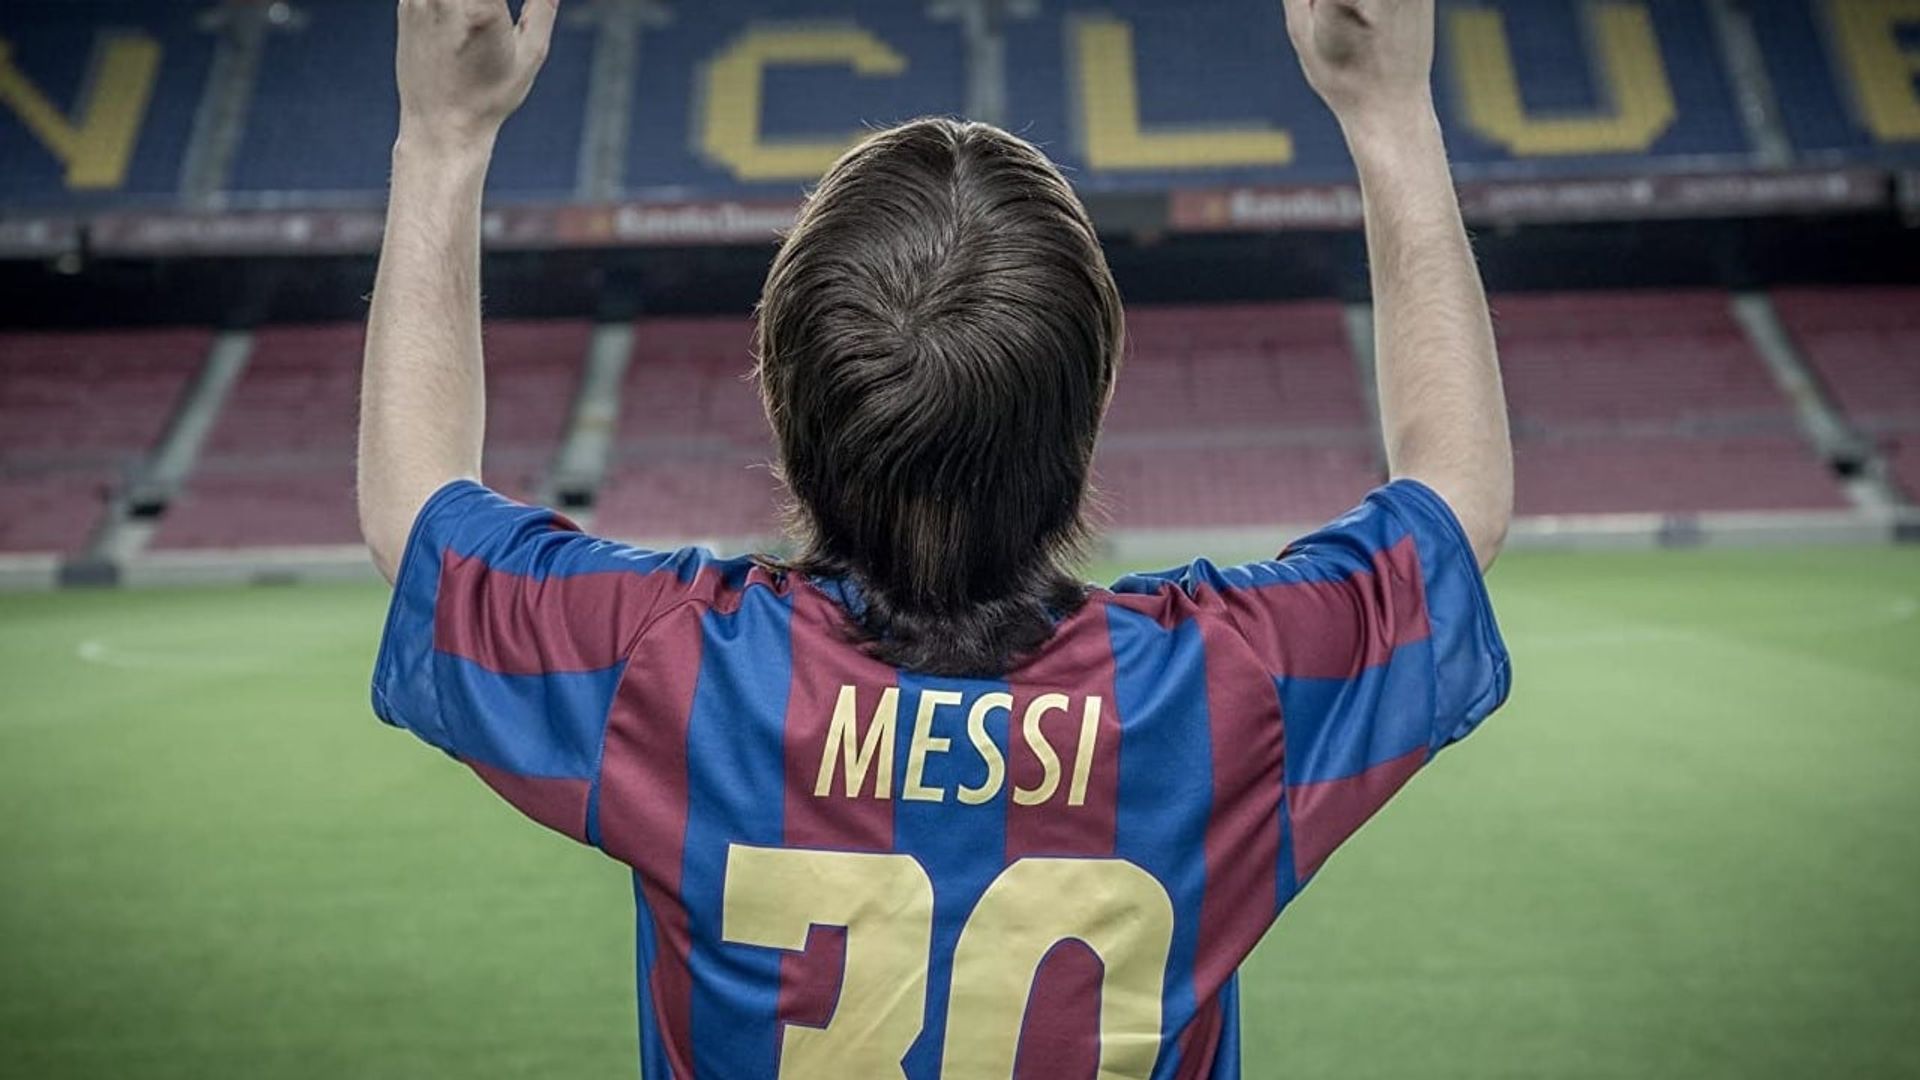 Messi background